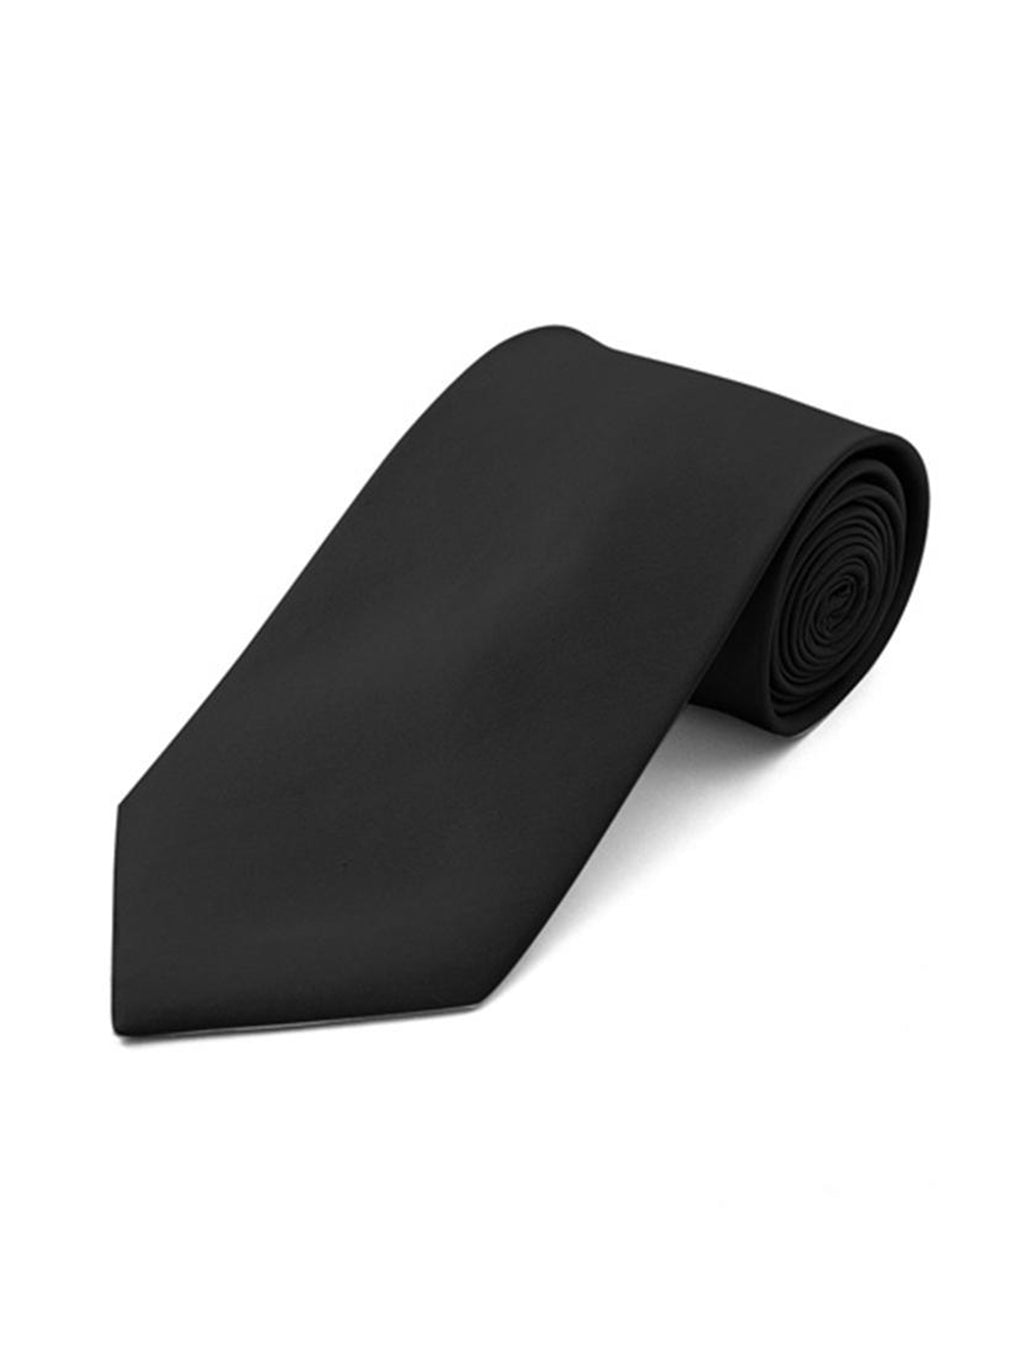 Men's Black Solid Color Microfiber Poly Woven 3 Inch Neck Tie Neck Tie TheDapperTie Black Regular 